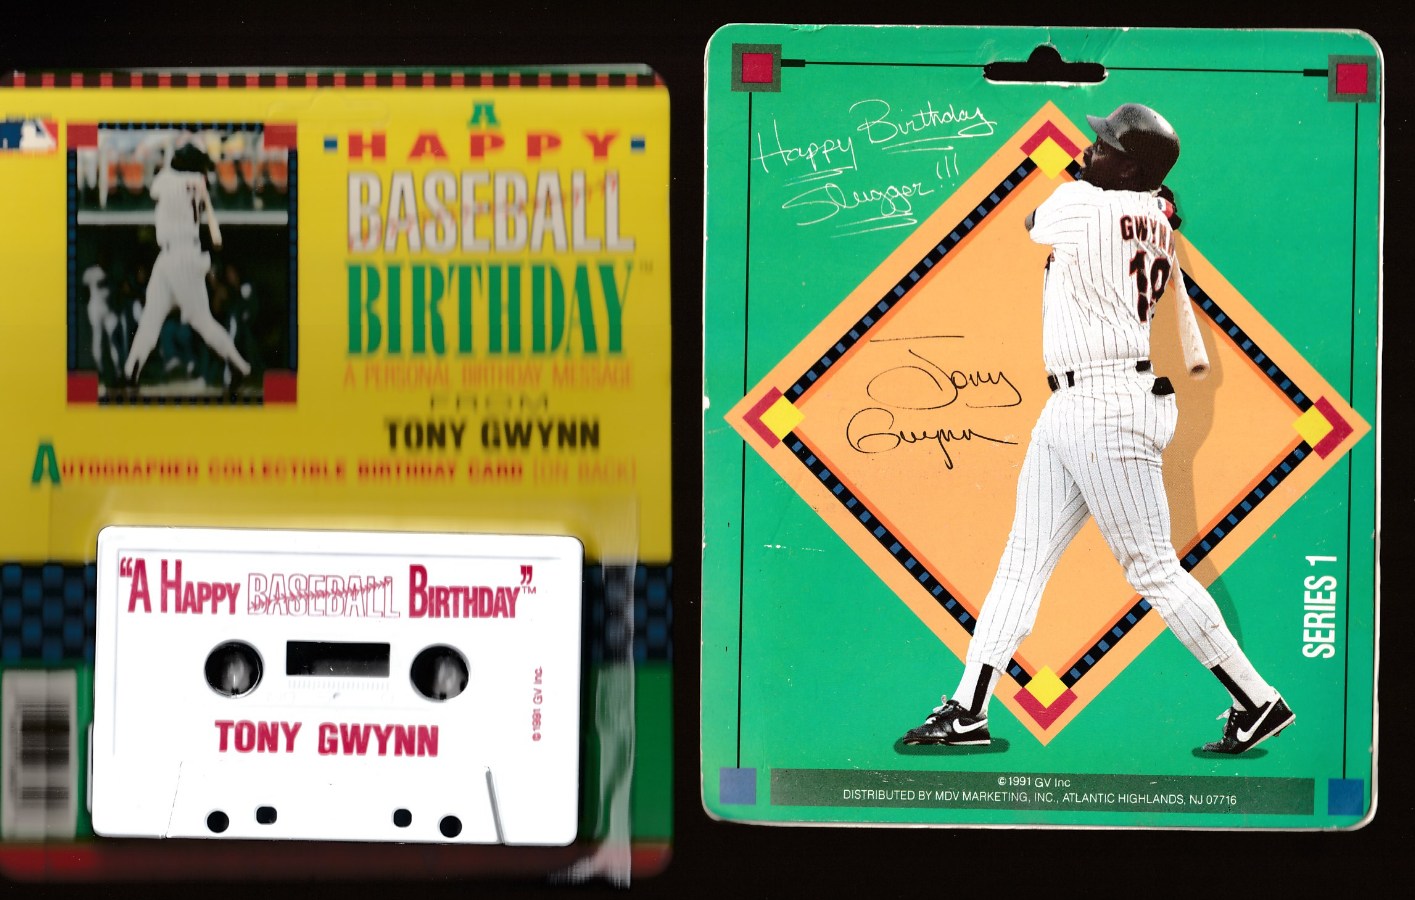 Tony Gwynn - 1991 BIRTHDAY GREETING [White][GV Inc.] *** RARE *** Baseball cards value